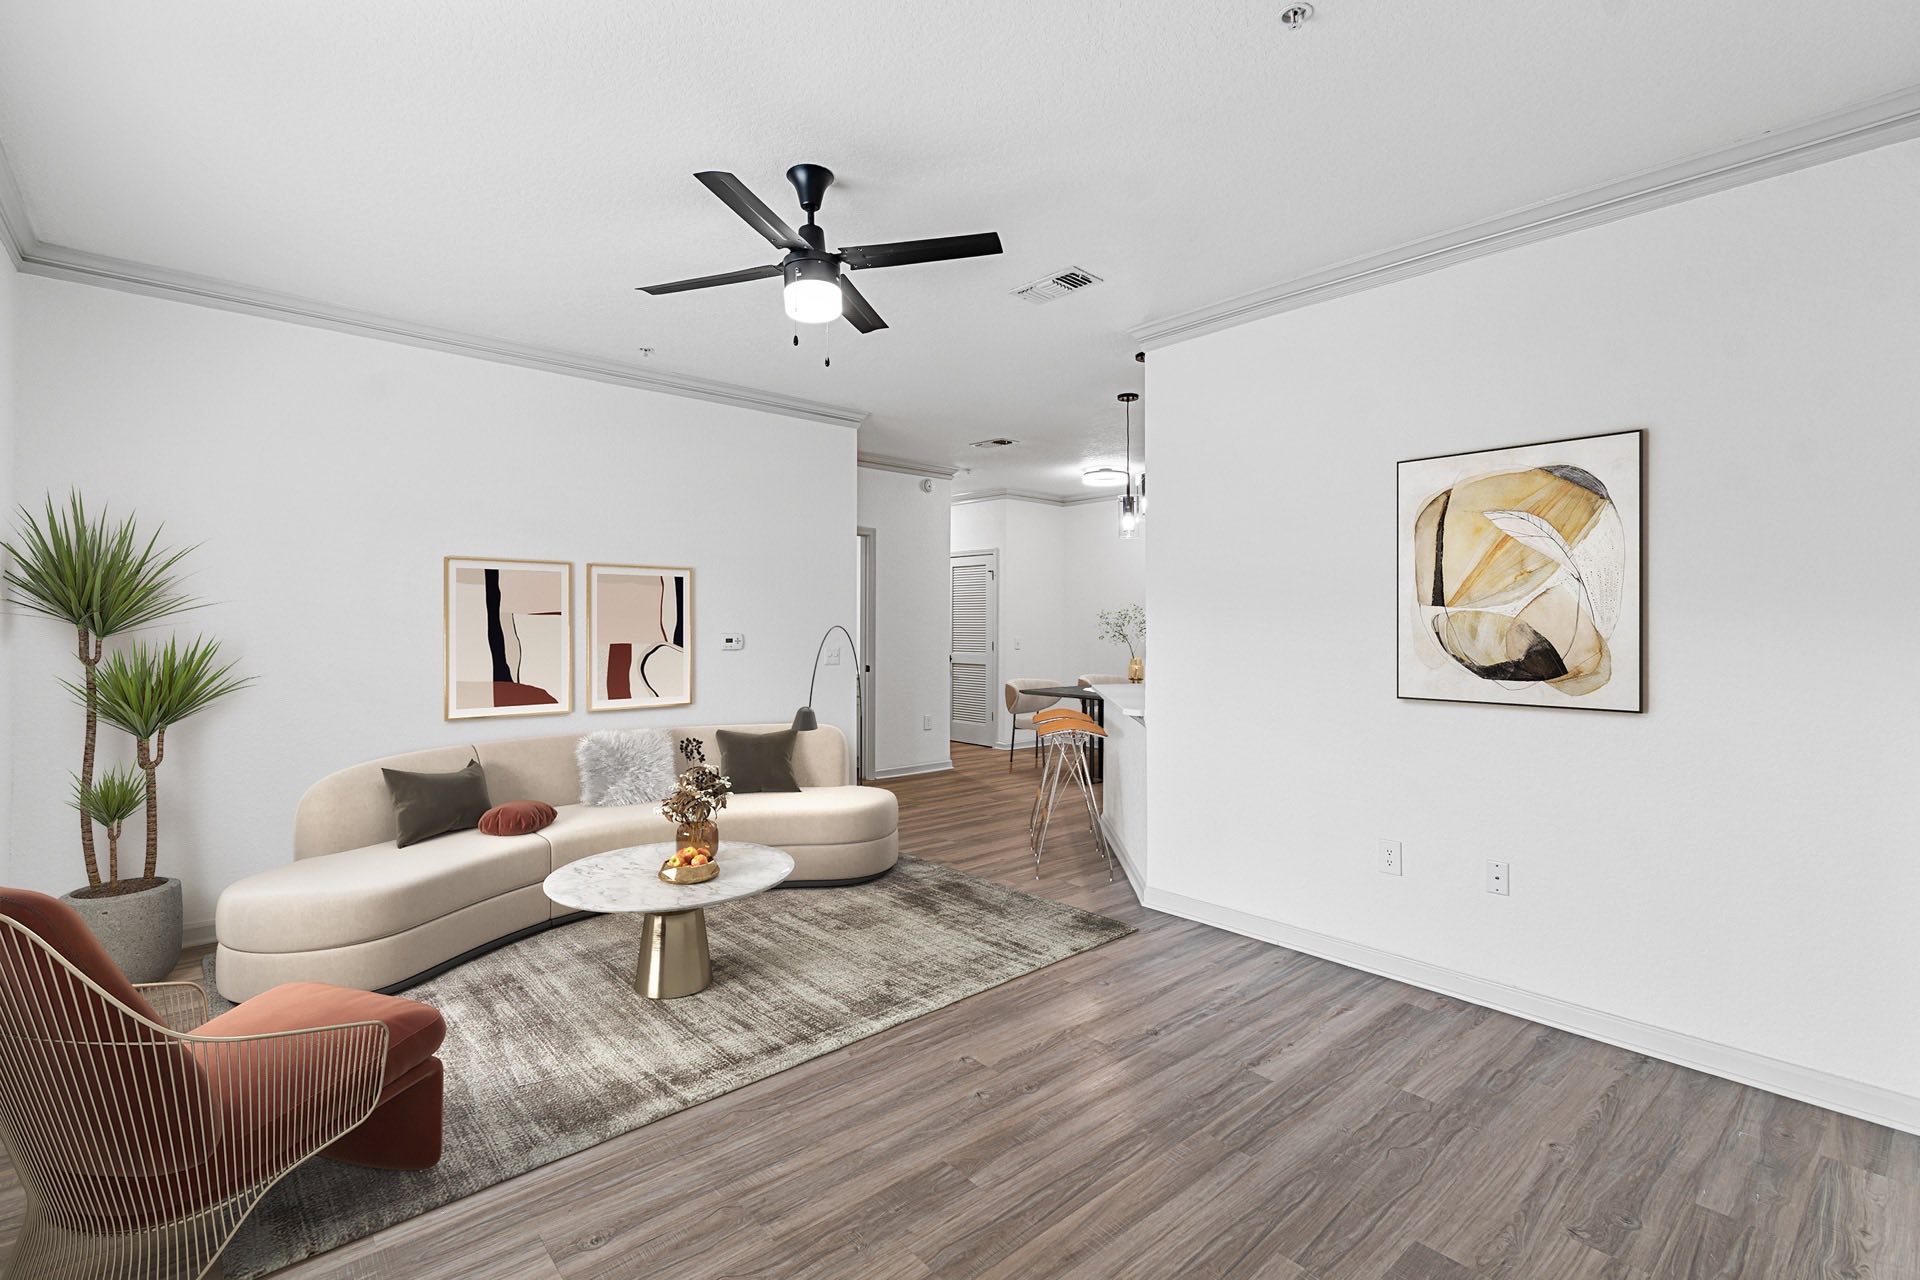 Living room with vinyl, wood style flooring